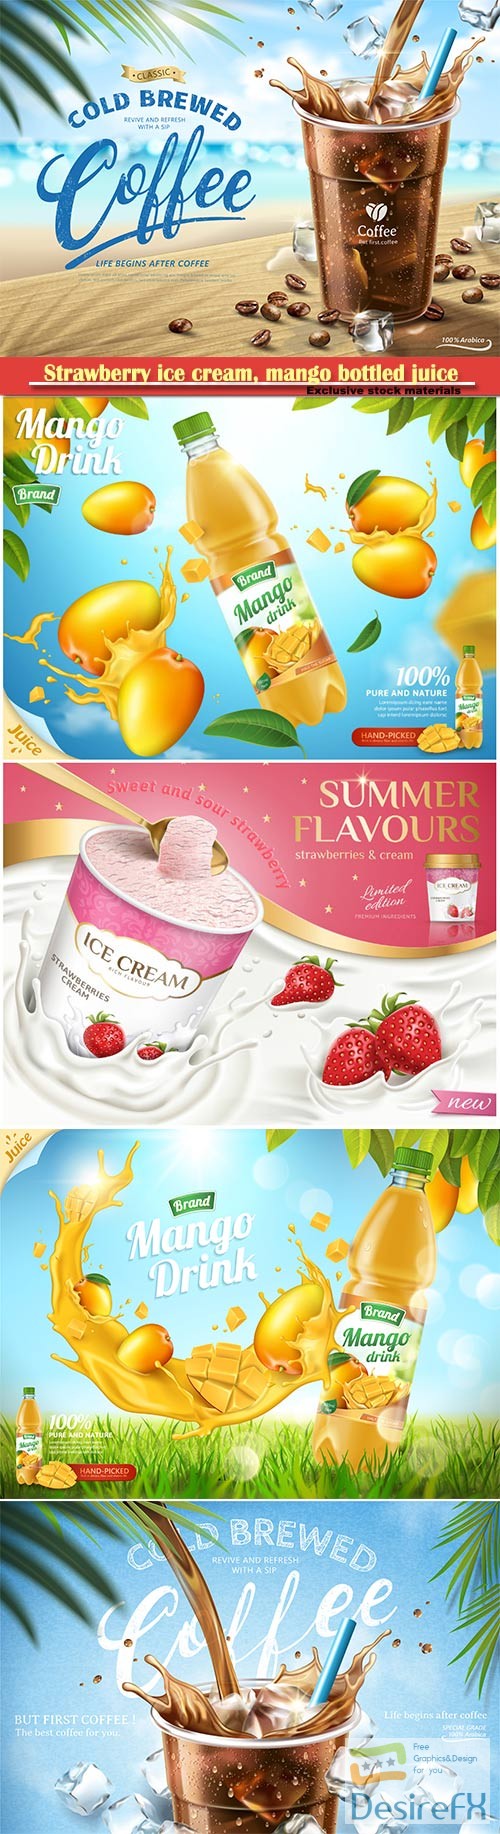 Strawberry ice cream, mango bottled juice, coffee ads, 3d vector illustration